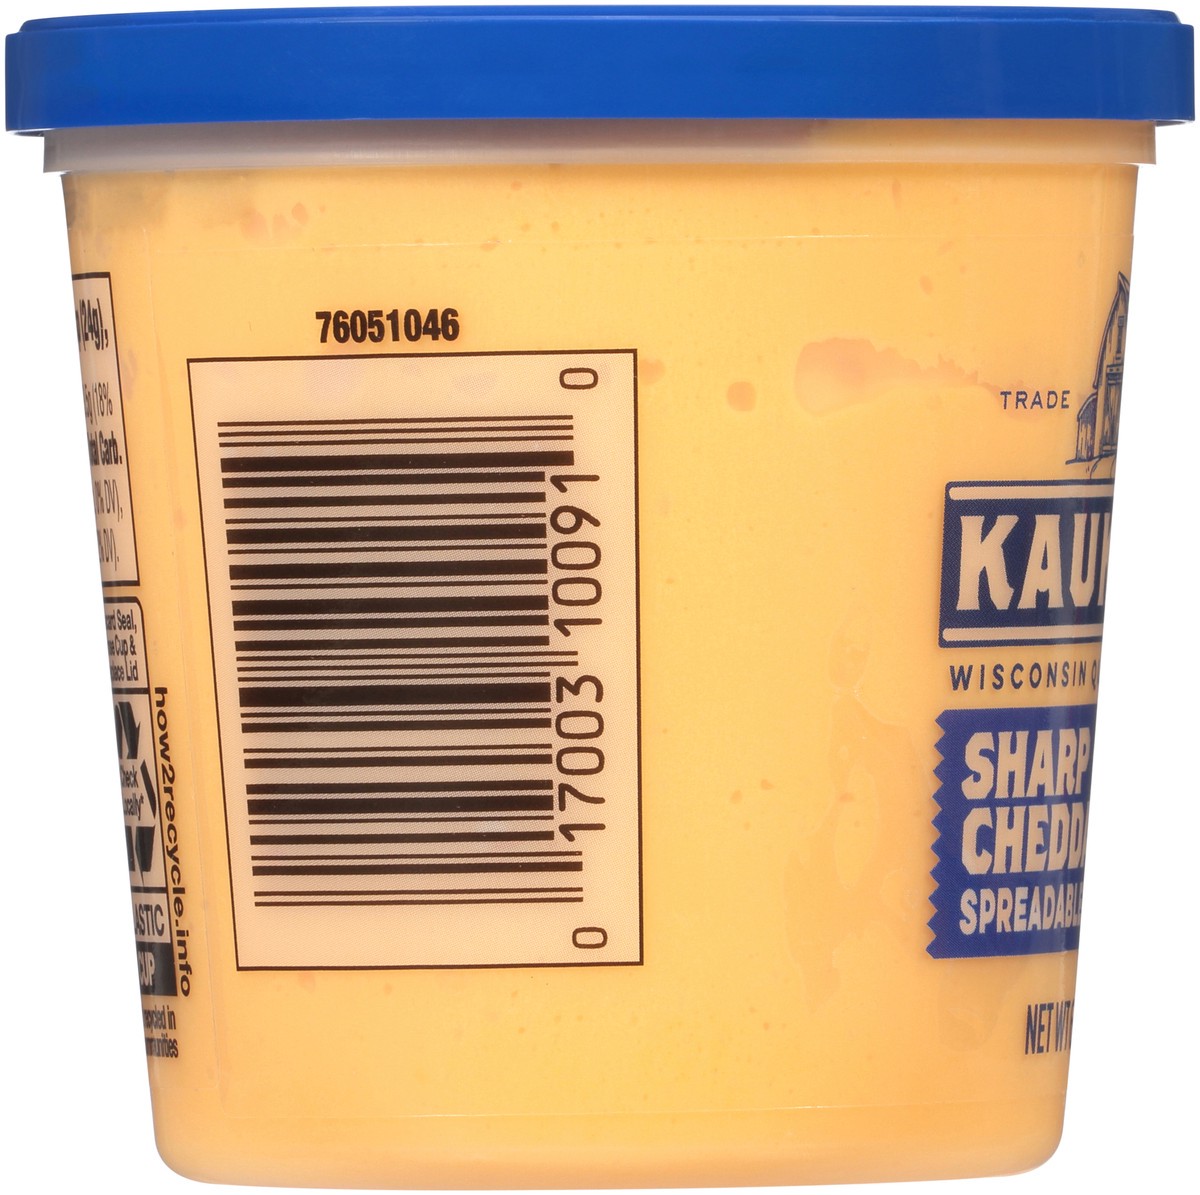 slide 9 of 13, Kaukauna Sharp Cheddar Spreadable Cheese Cup, 6.5 oz, 6.5 oz